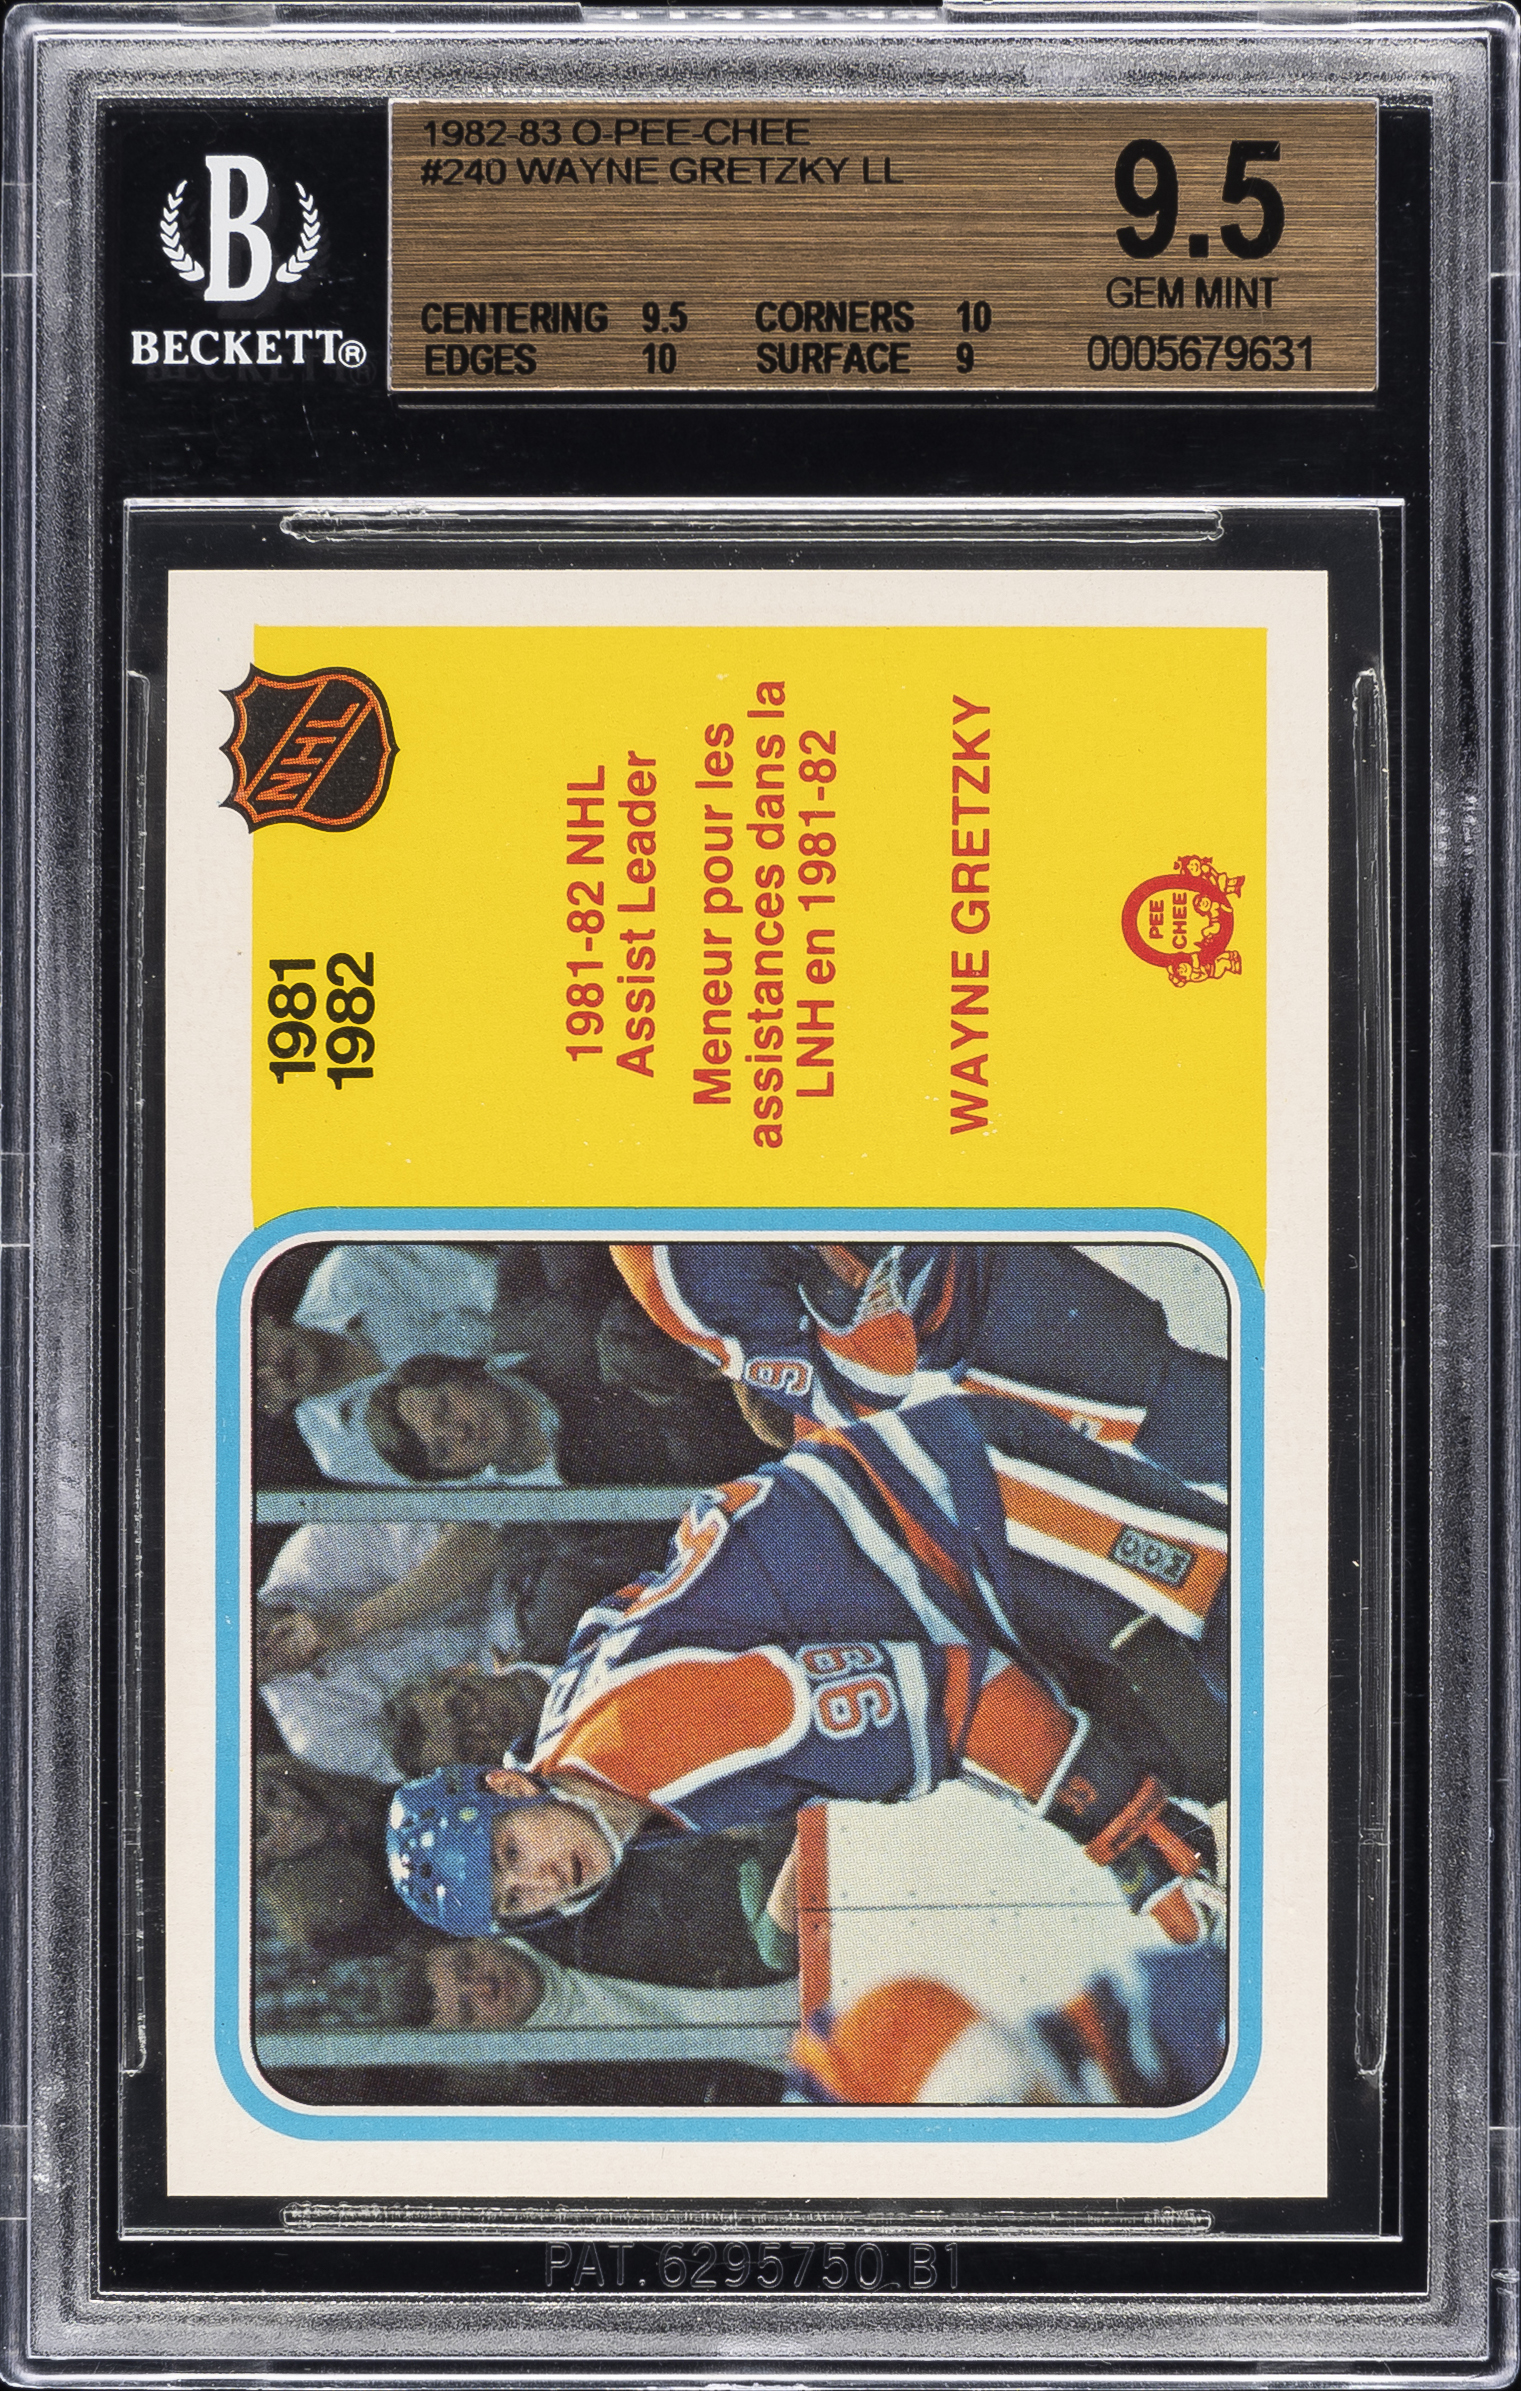 1982-83 Opeechee NHL Assist Leader #240 Wayne Gretzky – BGS GEM MINT 9.5